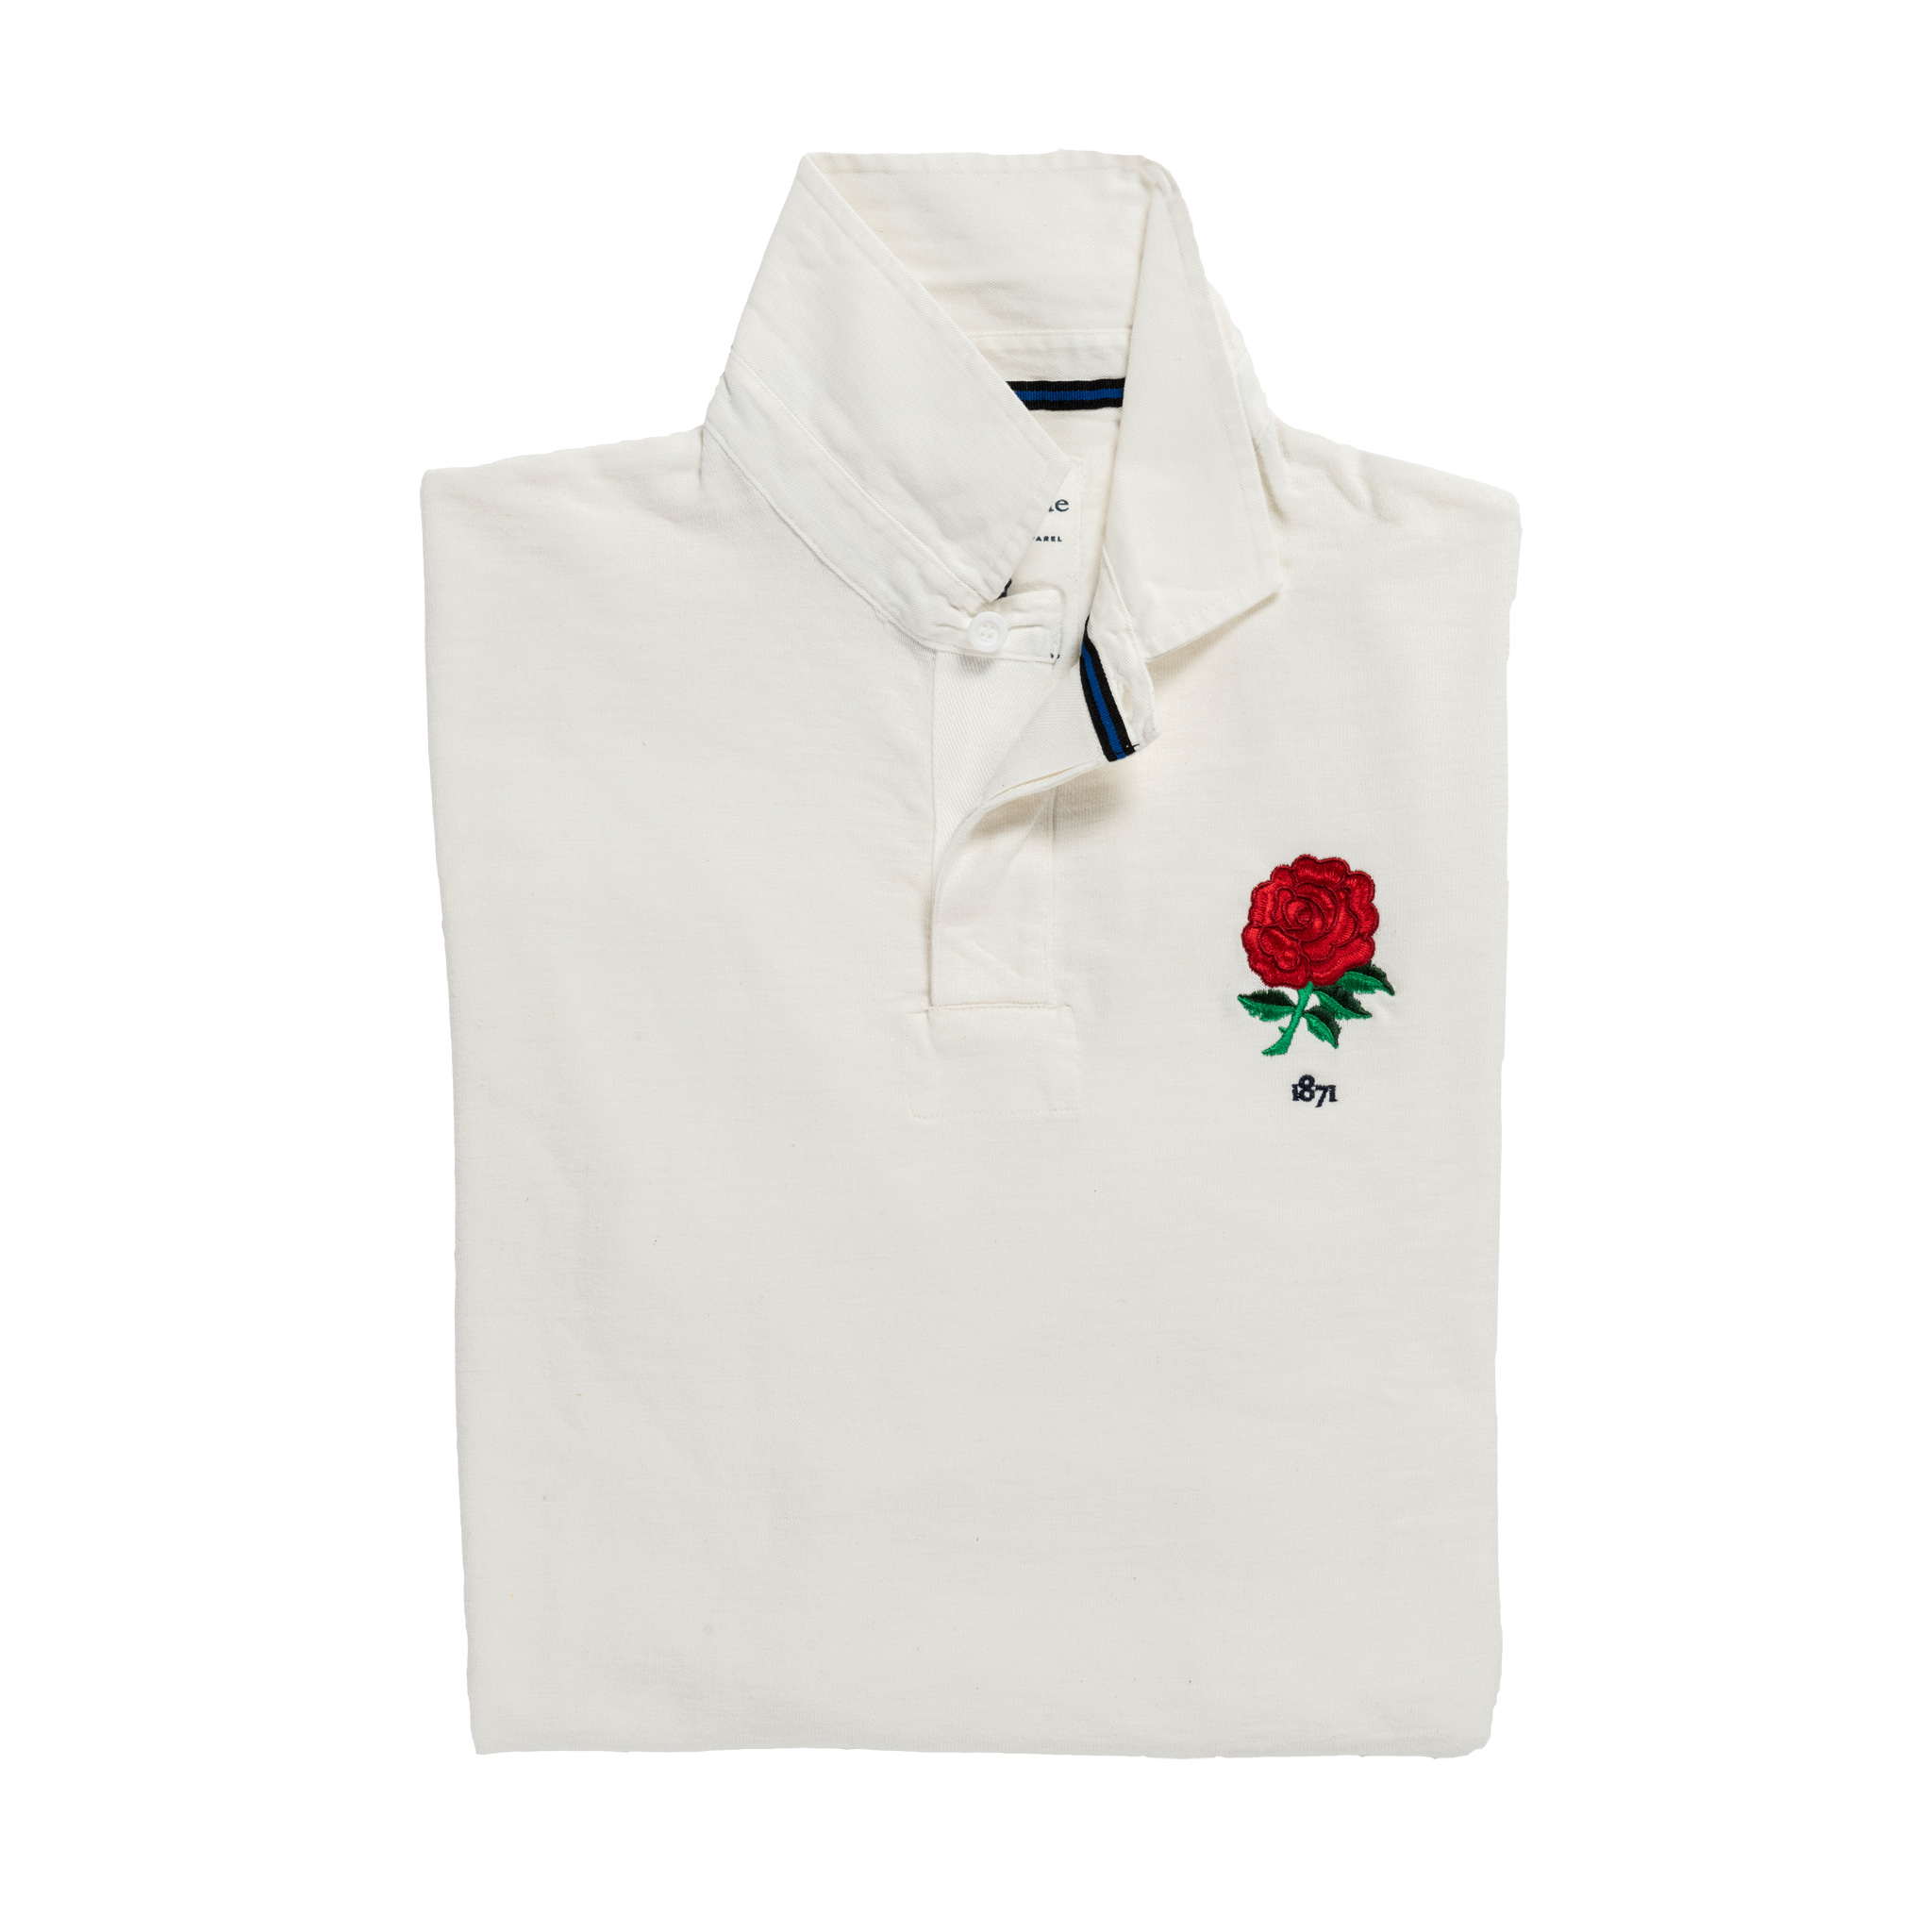 England 1871 Vintage Rugby Shirt_Folded